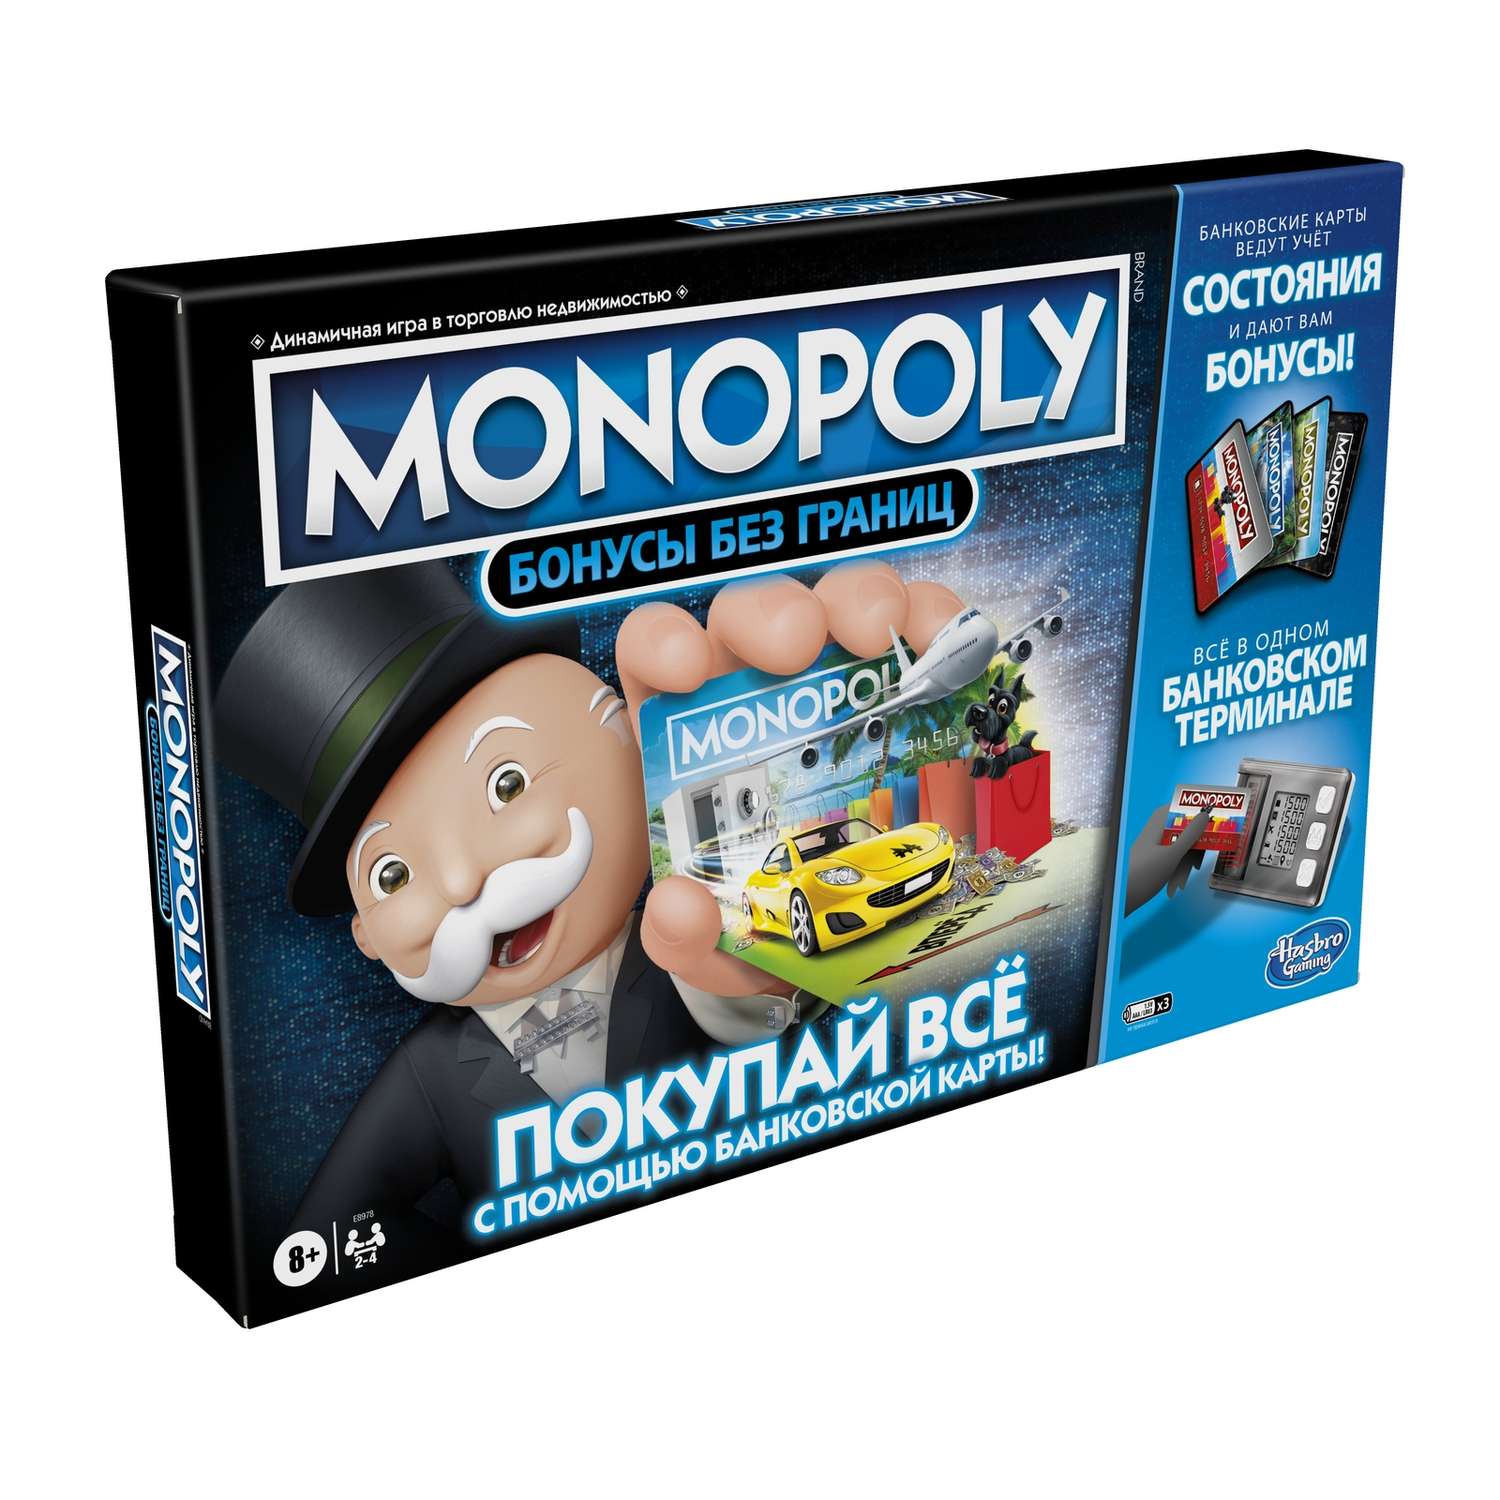 Игра настольная Monopoly Монополия Бонусы без границ E8978121 - фото 2